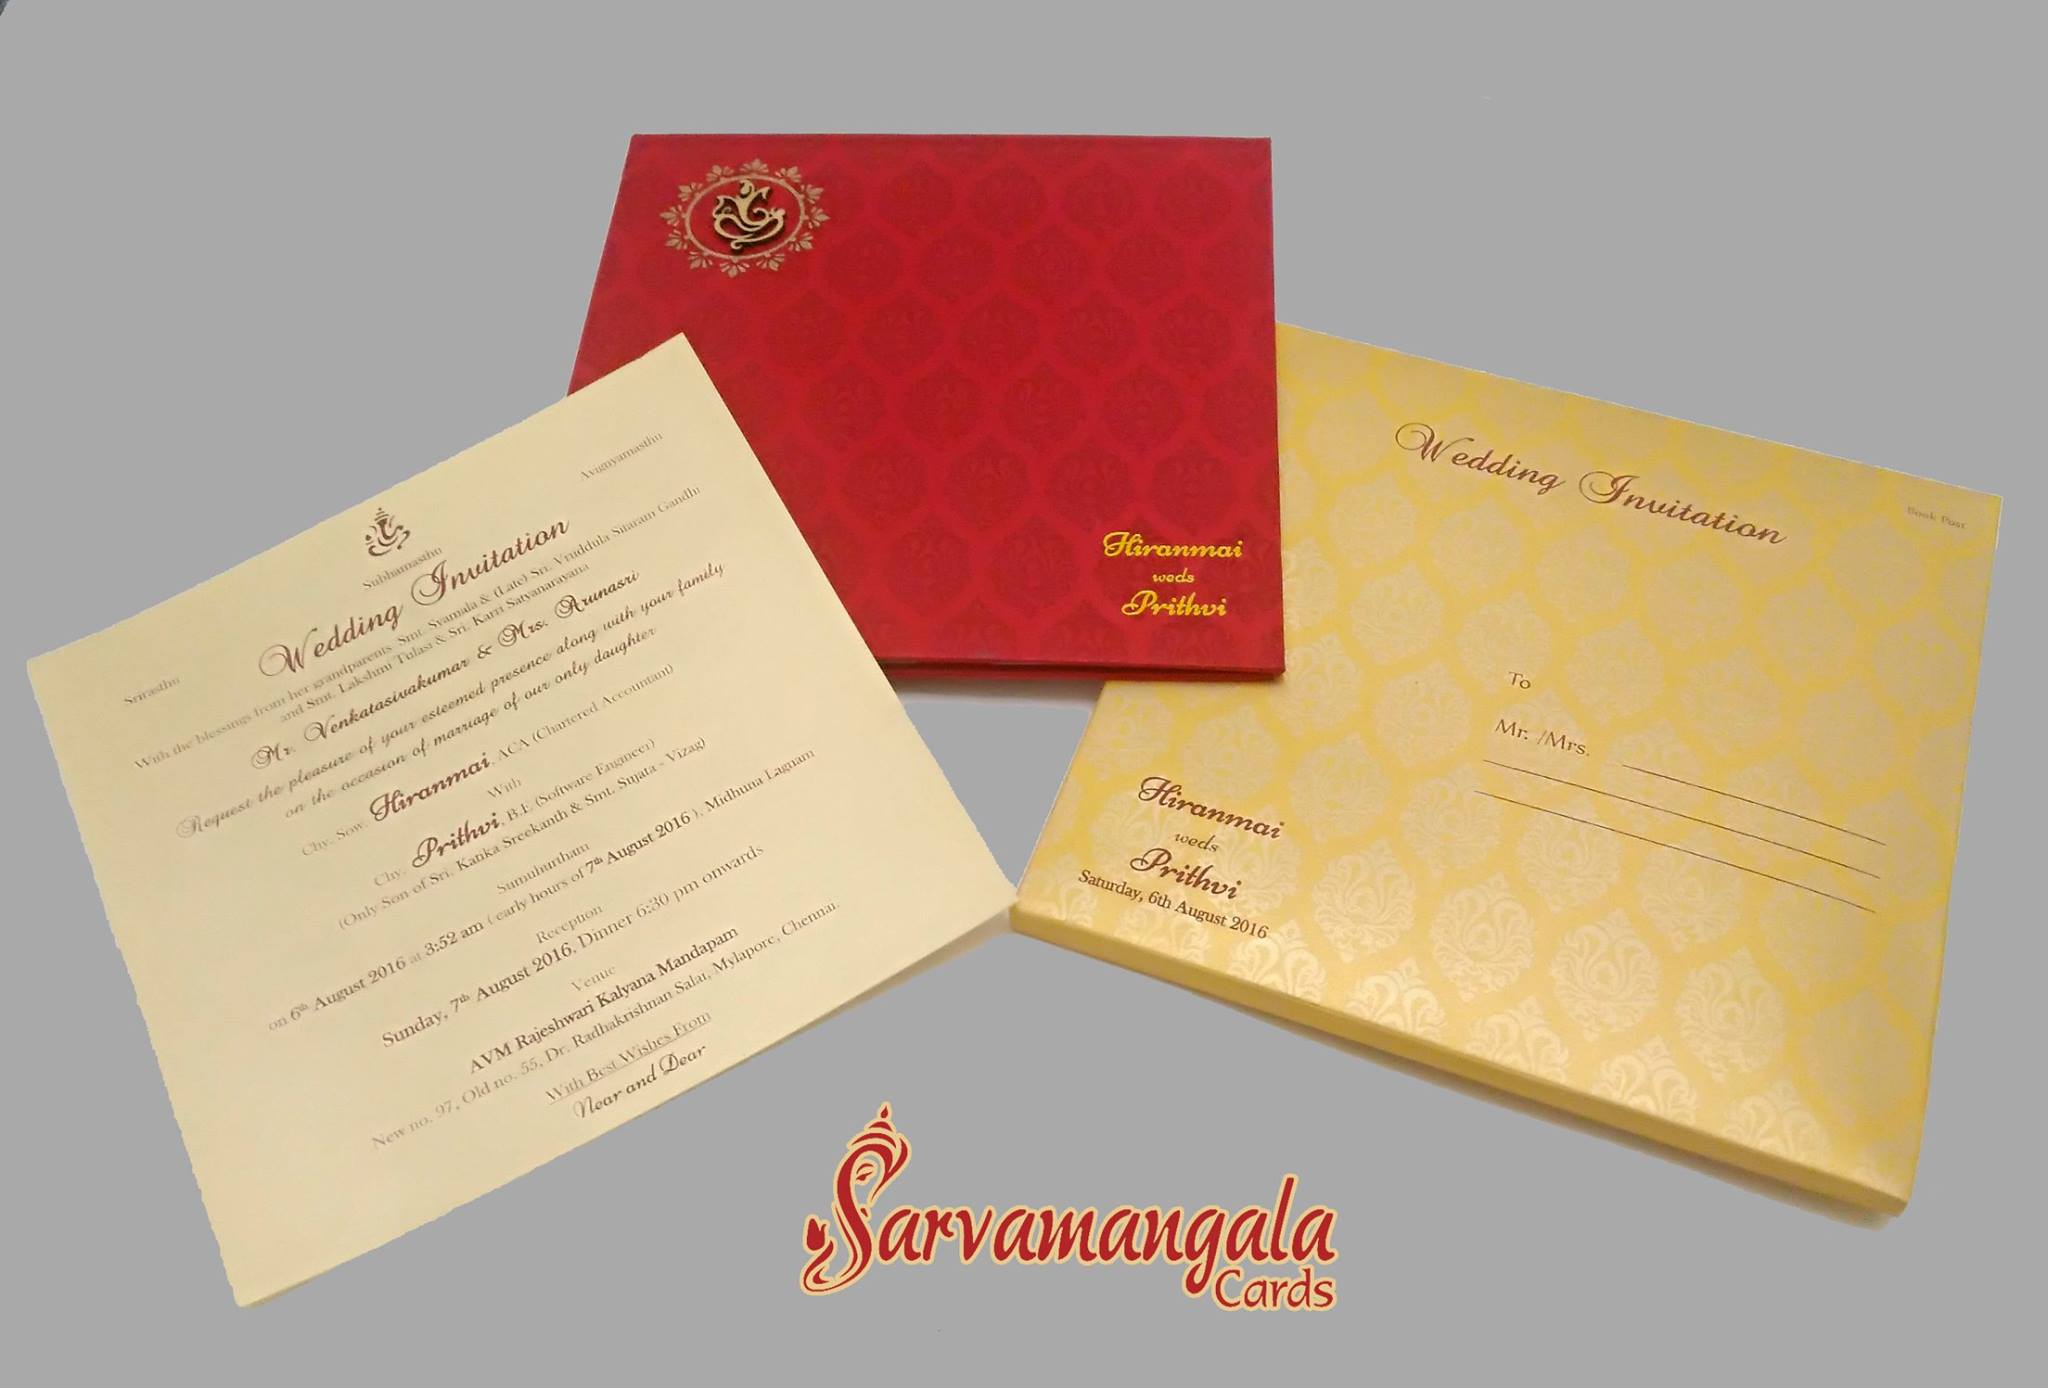  Sarvamangala cards-img25